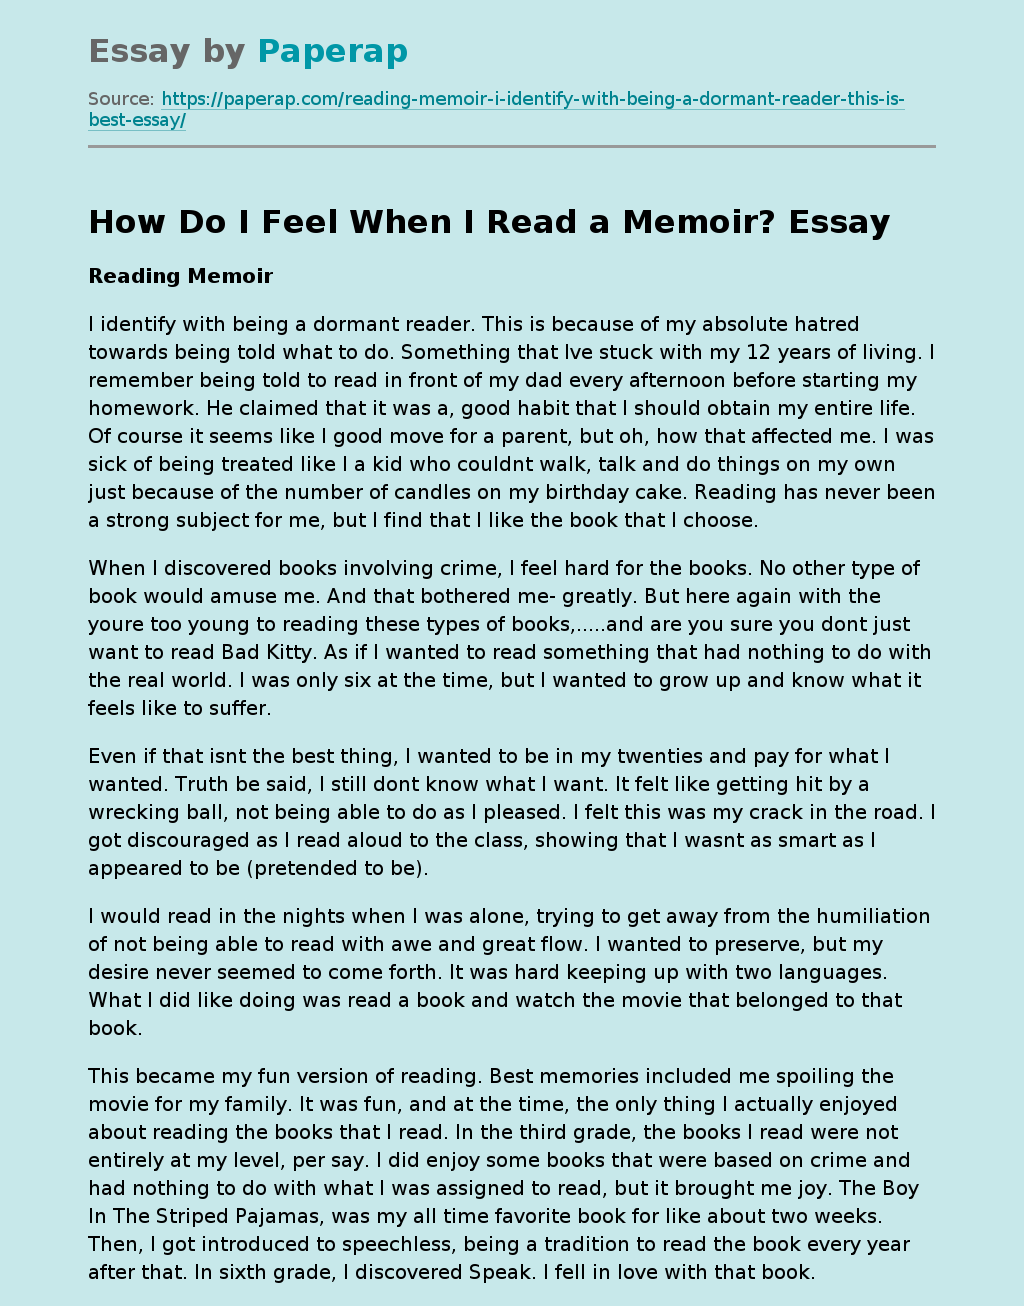 How Do I Feel When I Read a Memoir?